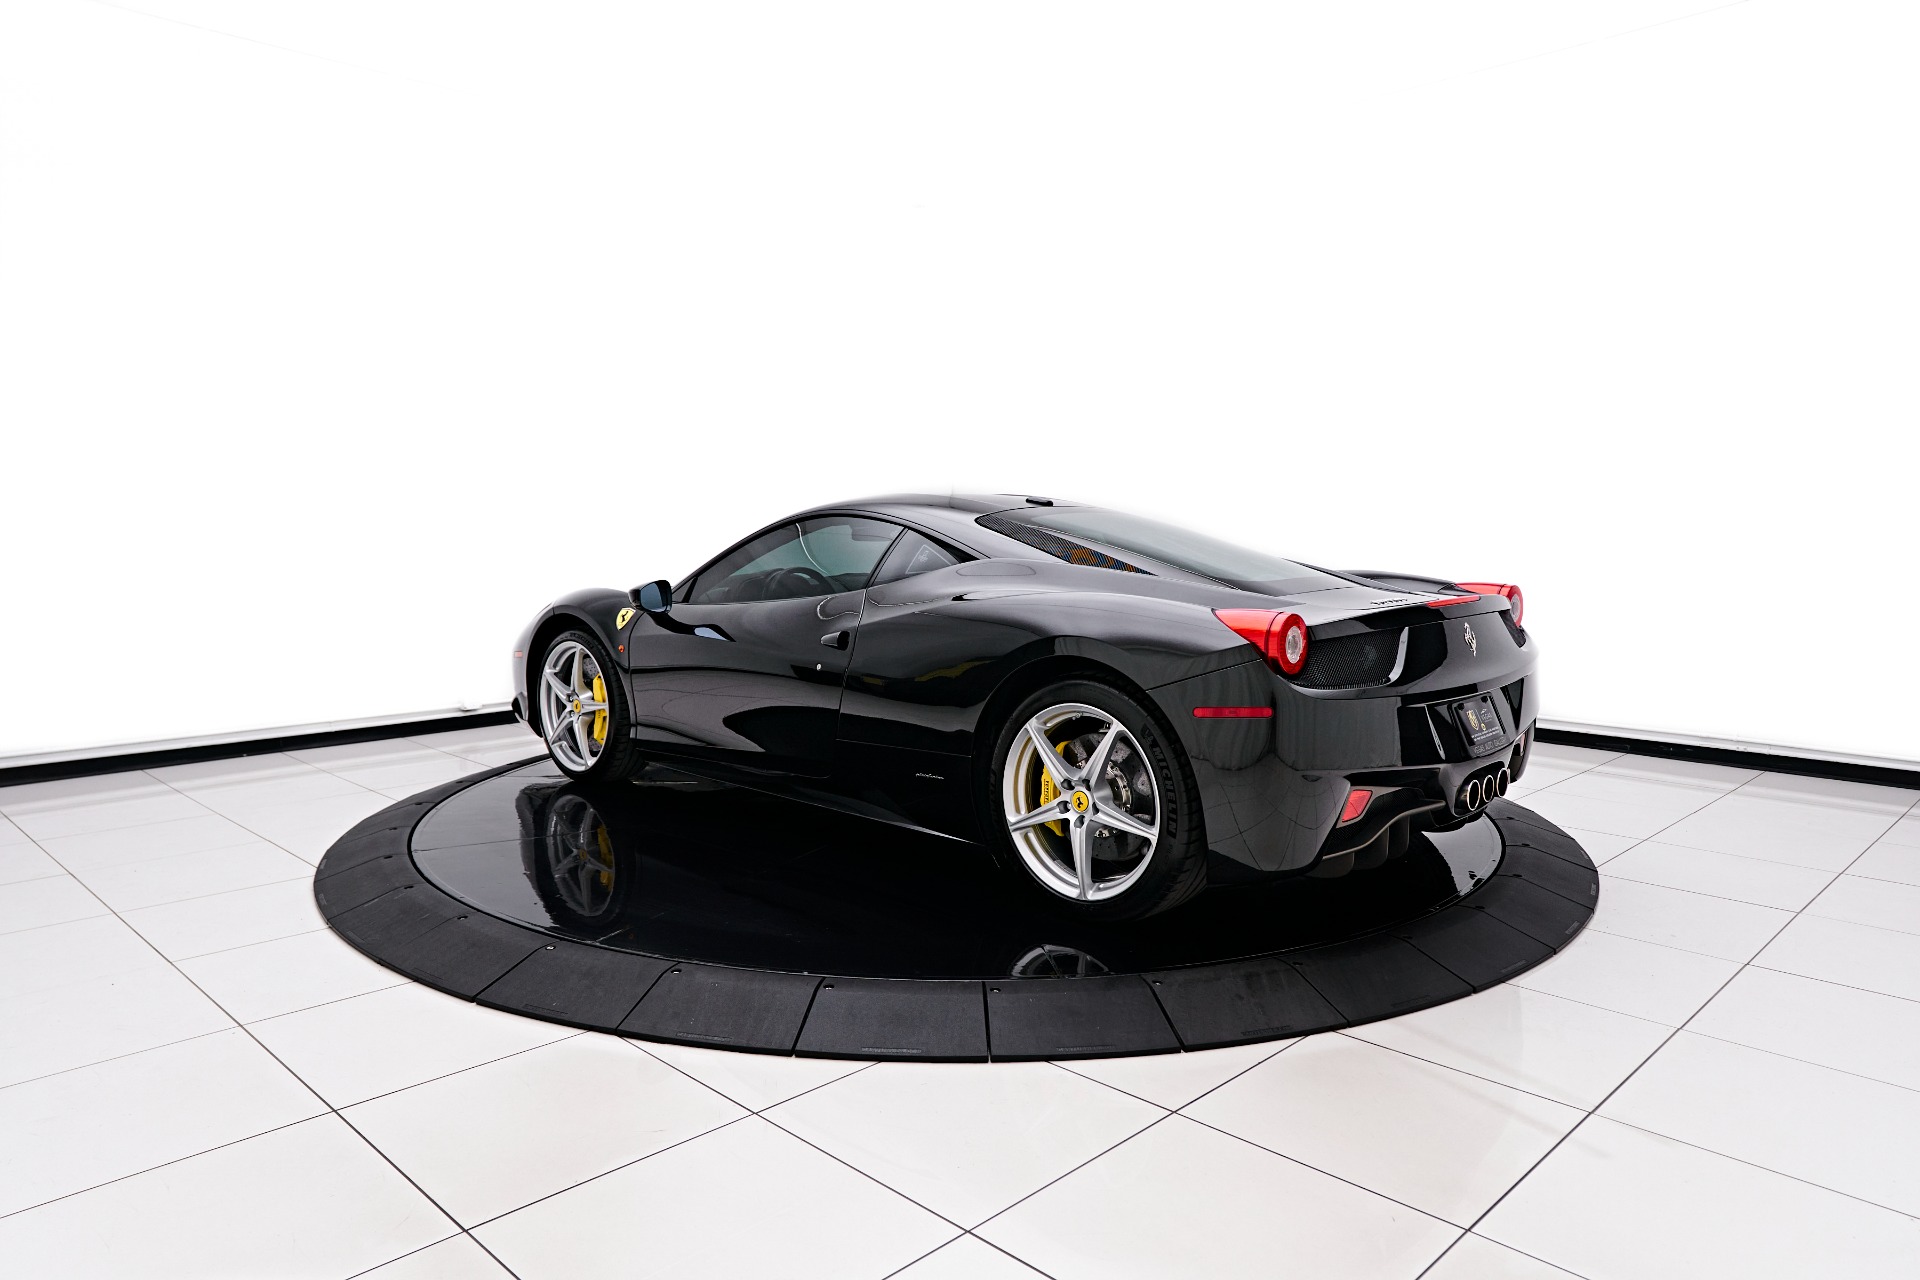 Used 2011 Ferrari 458 Italia Base For Sale (Sold) | Lotus Cars Las Vegas  Stock #V176286